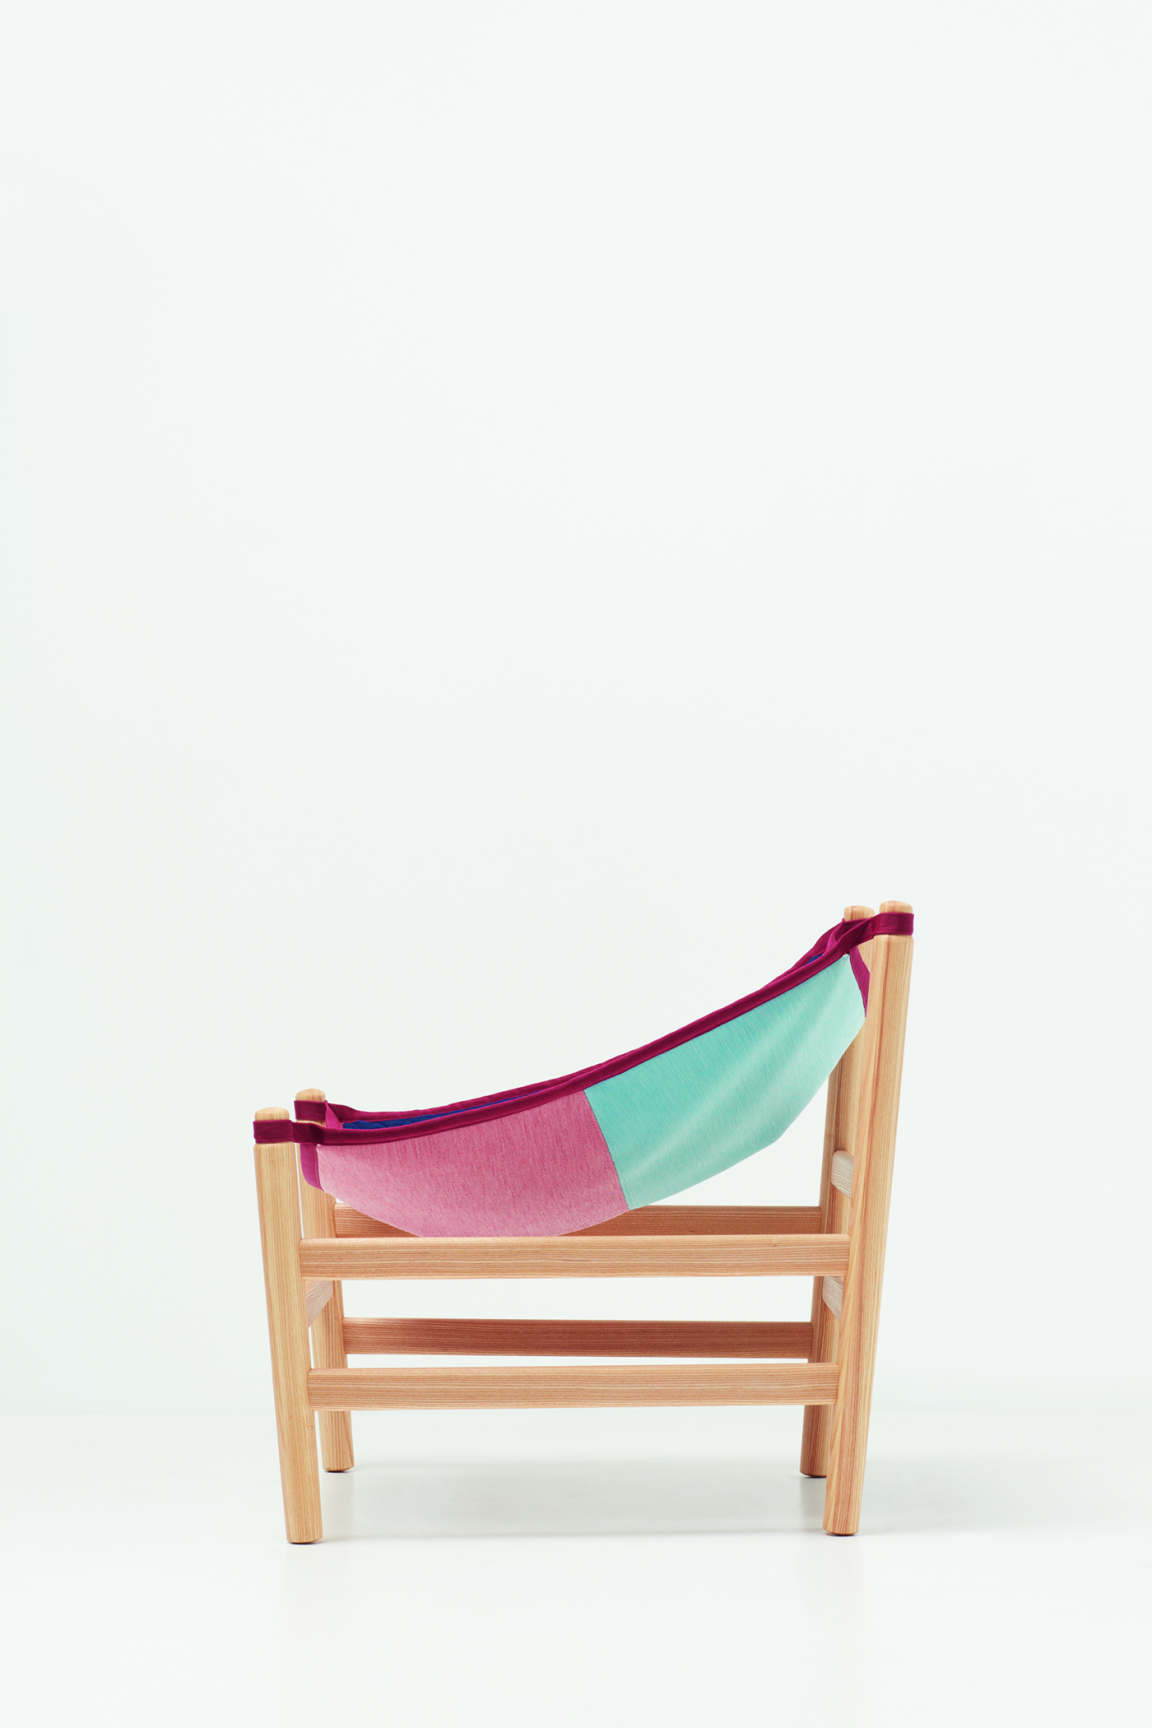 Knit Project - Wataru Kumano Hammock Chair 2020 Copyright Luke Evans